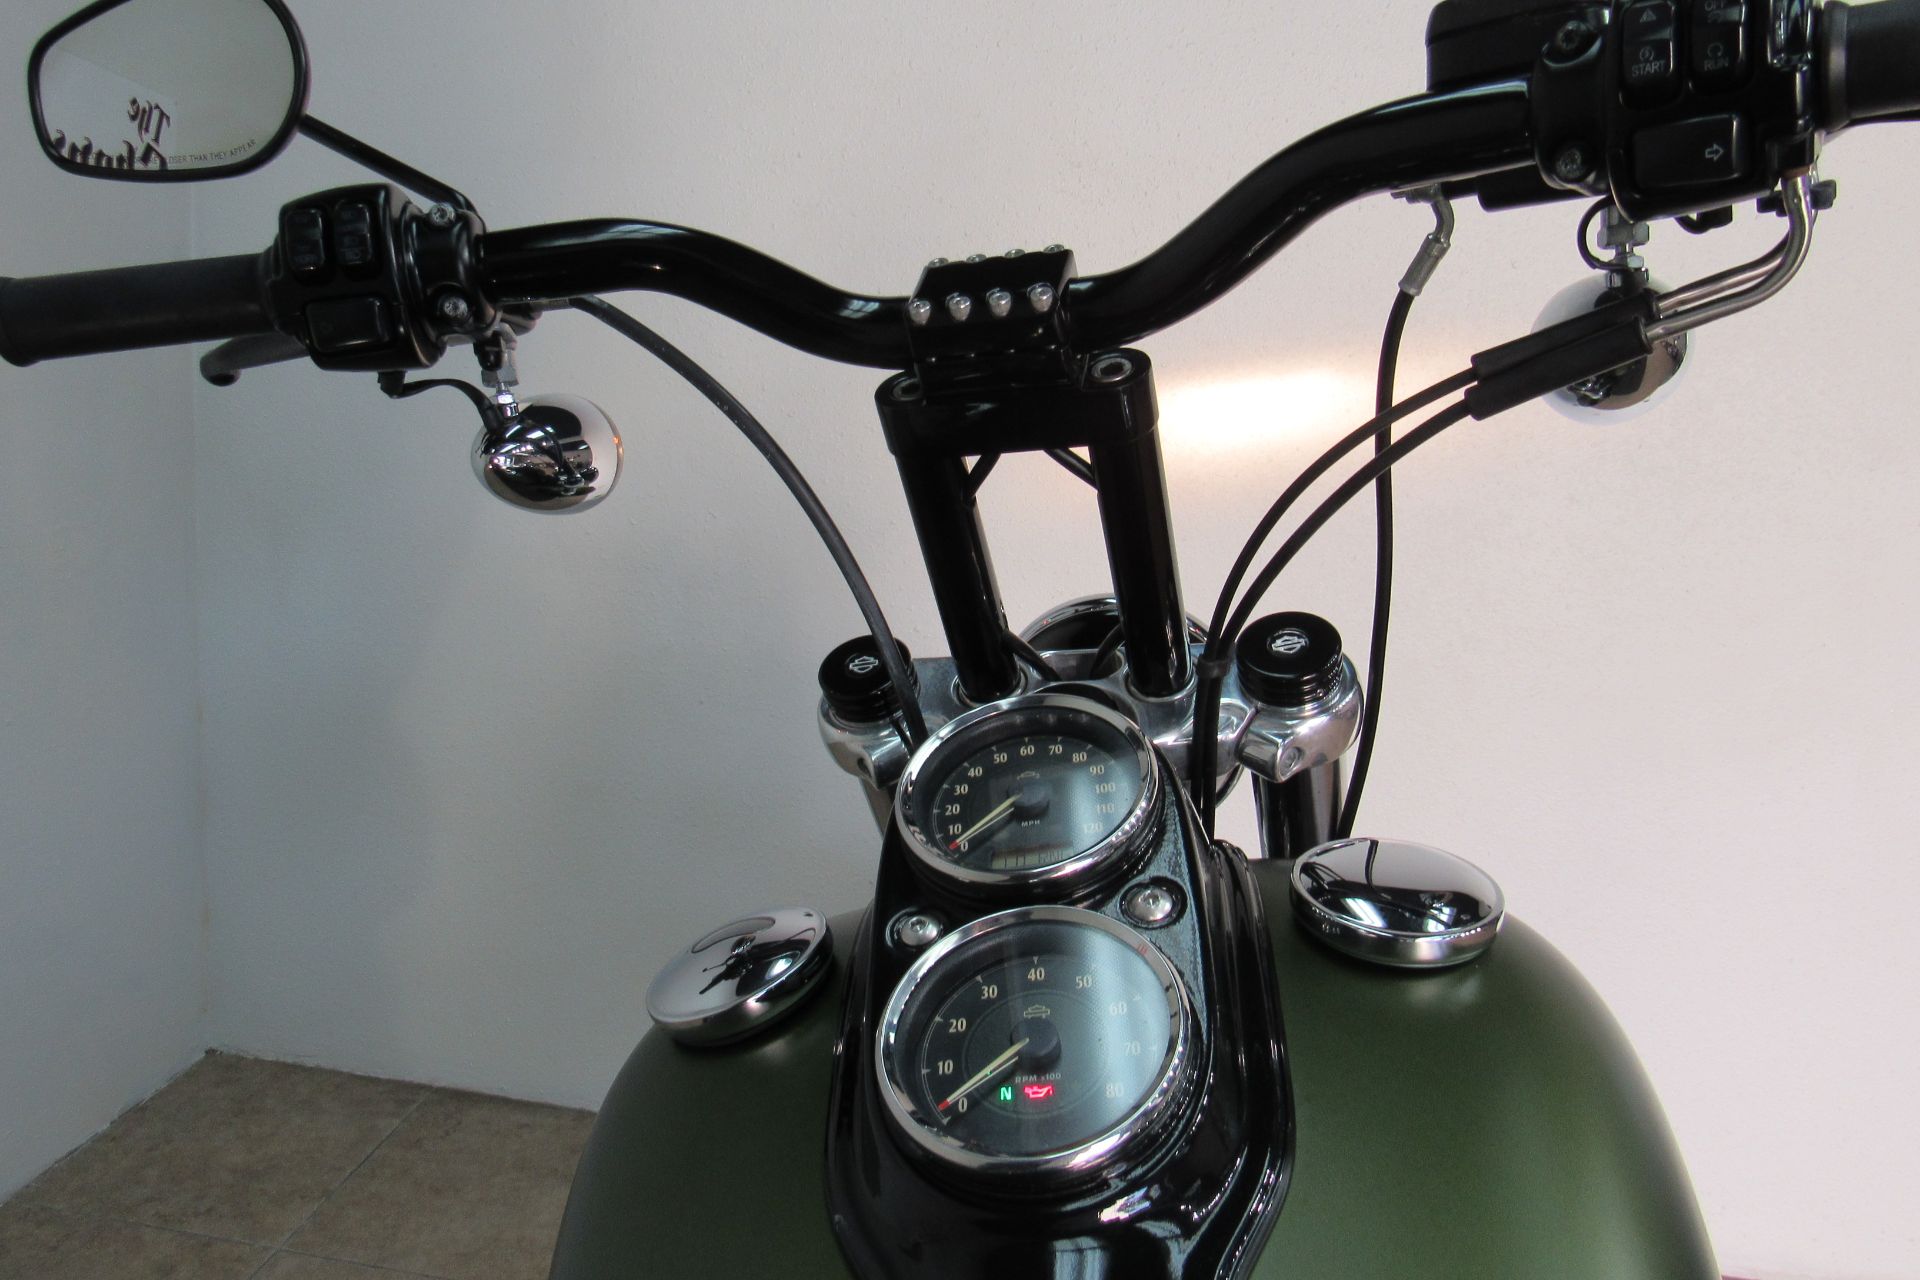 2014 Harley-Davidson Low Rider® in Temecula, California - Photo 23